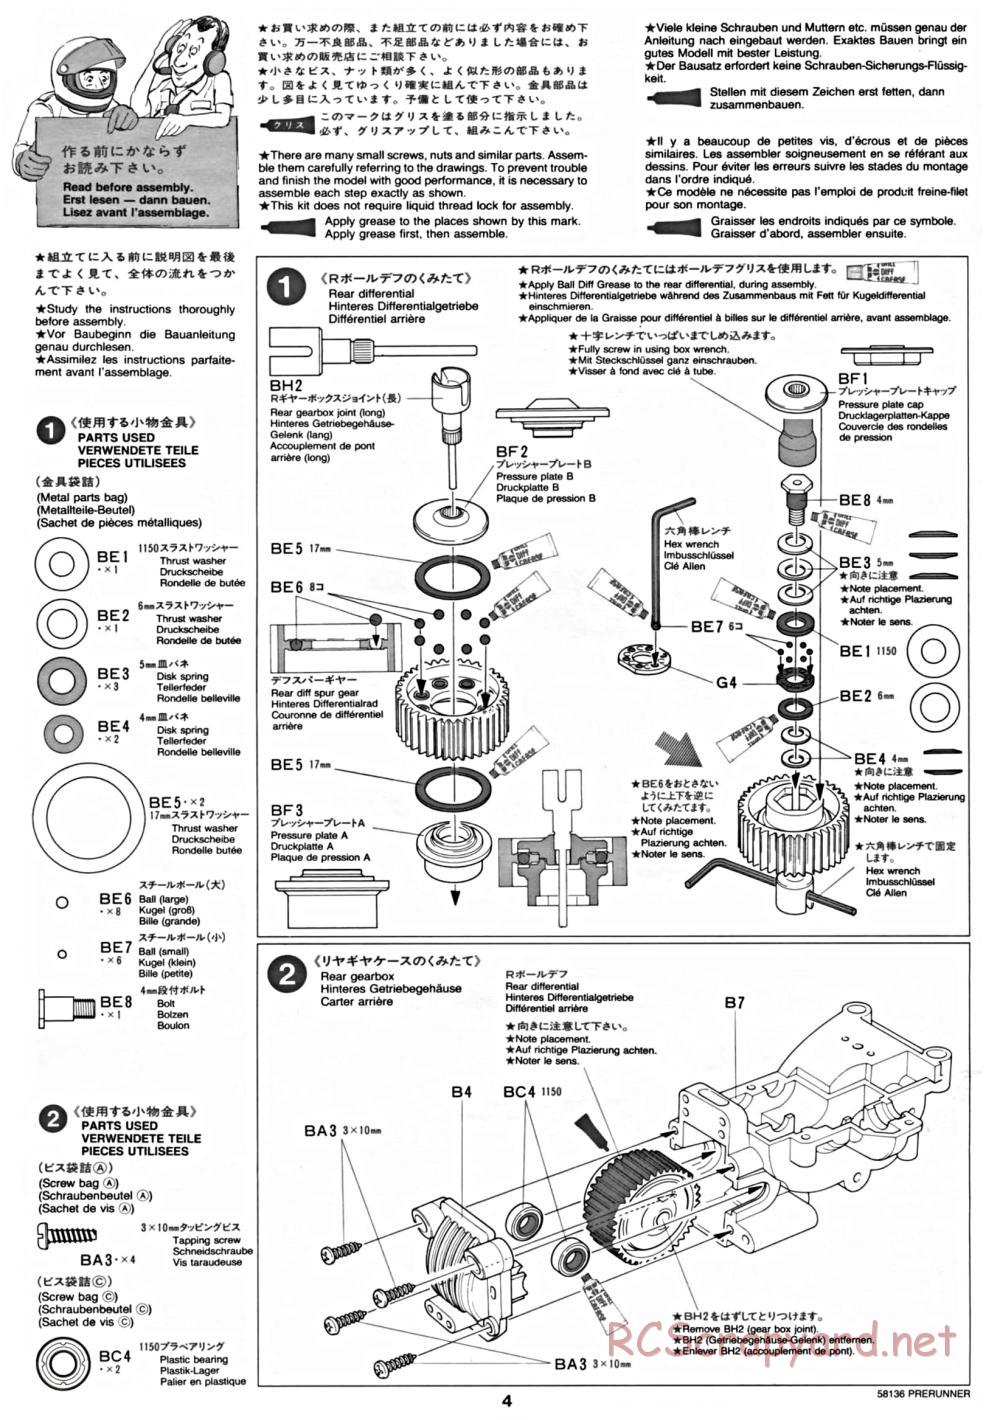 Tamiya - Toyota Prerunner Chassis - Manual - Page 4